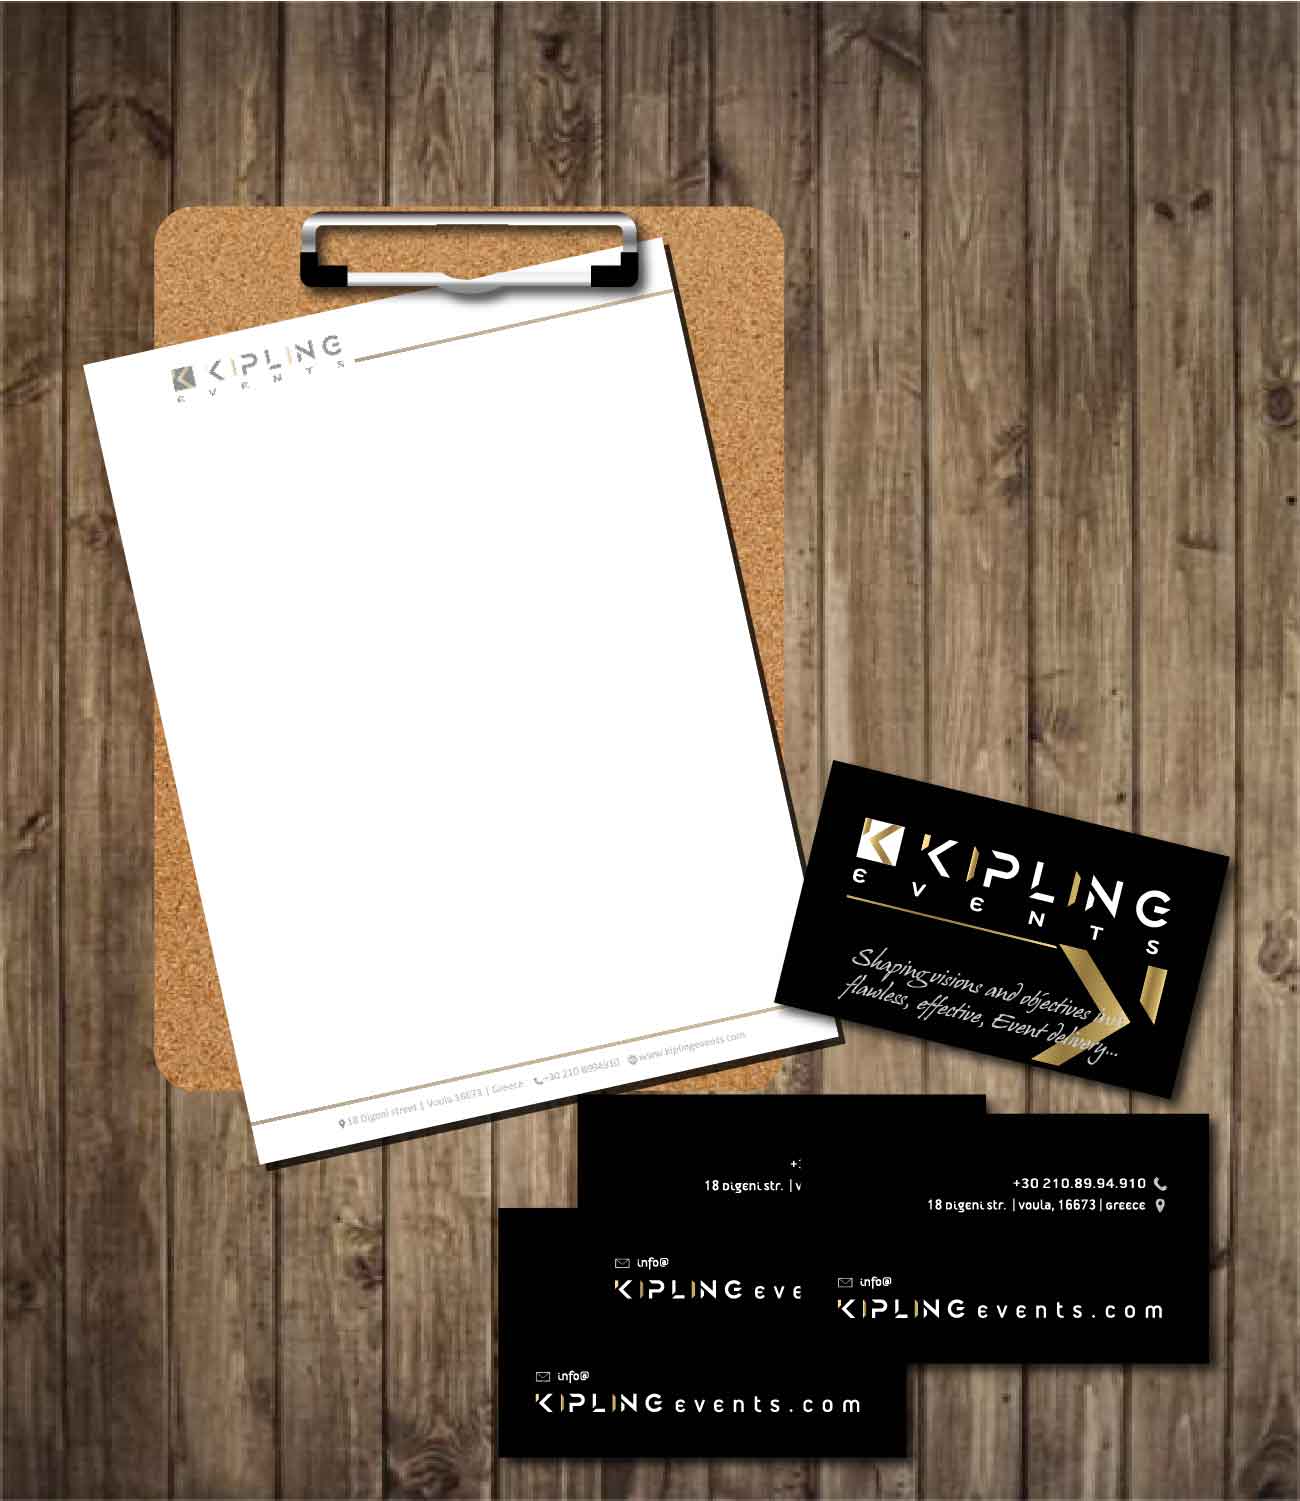 kipling events - brand identity design